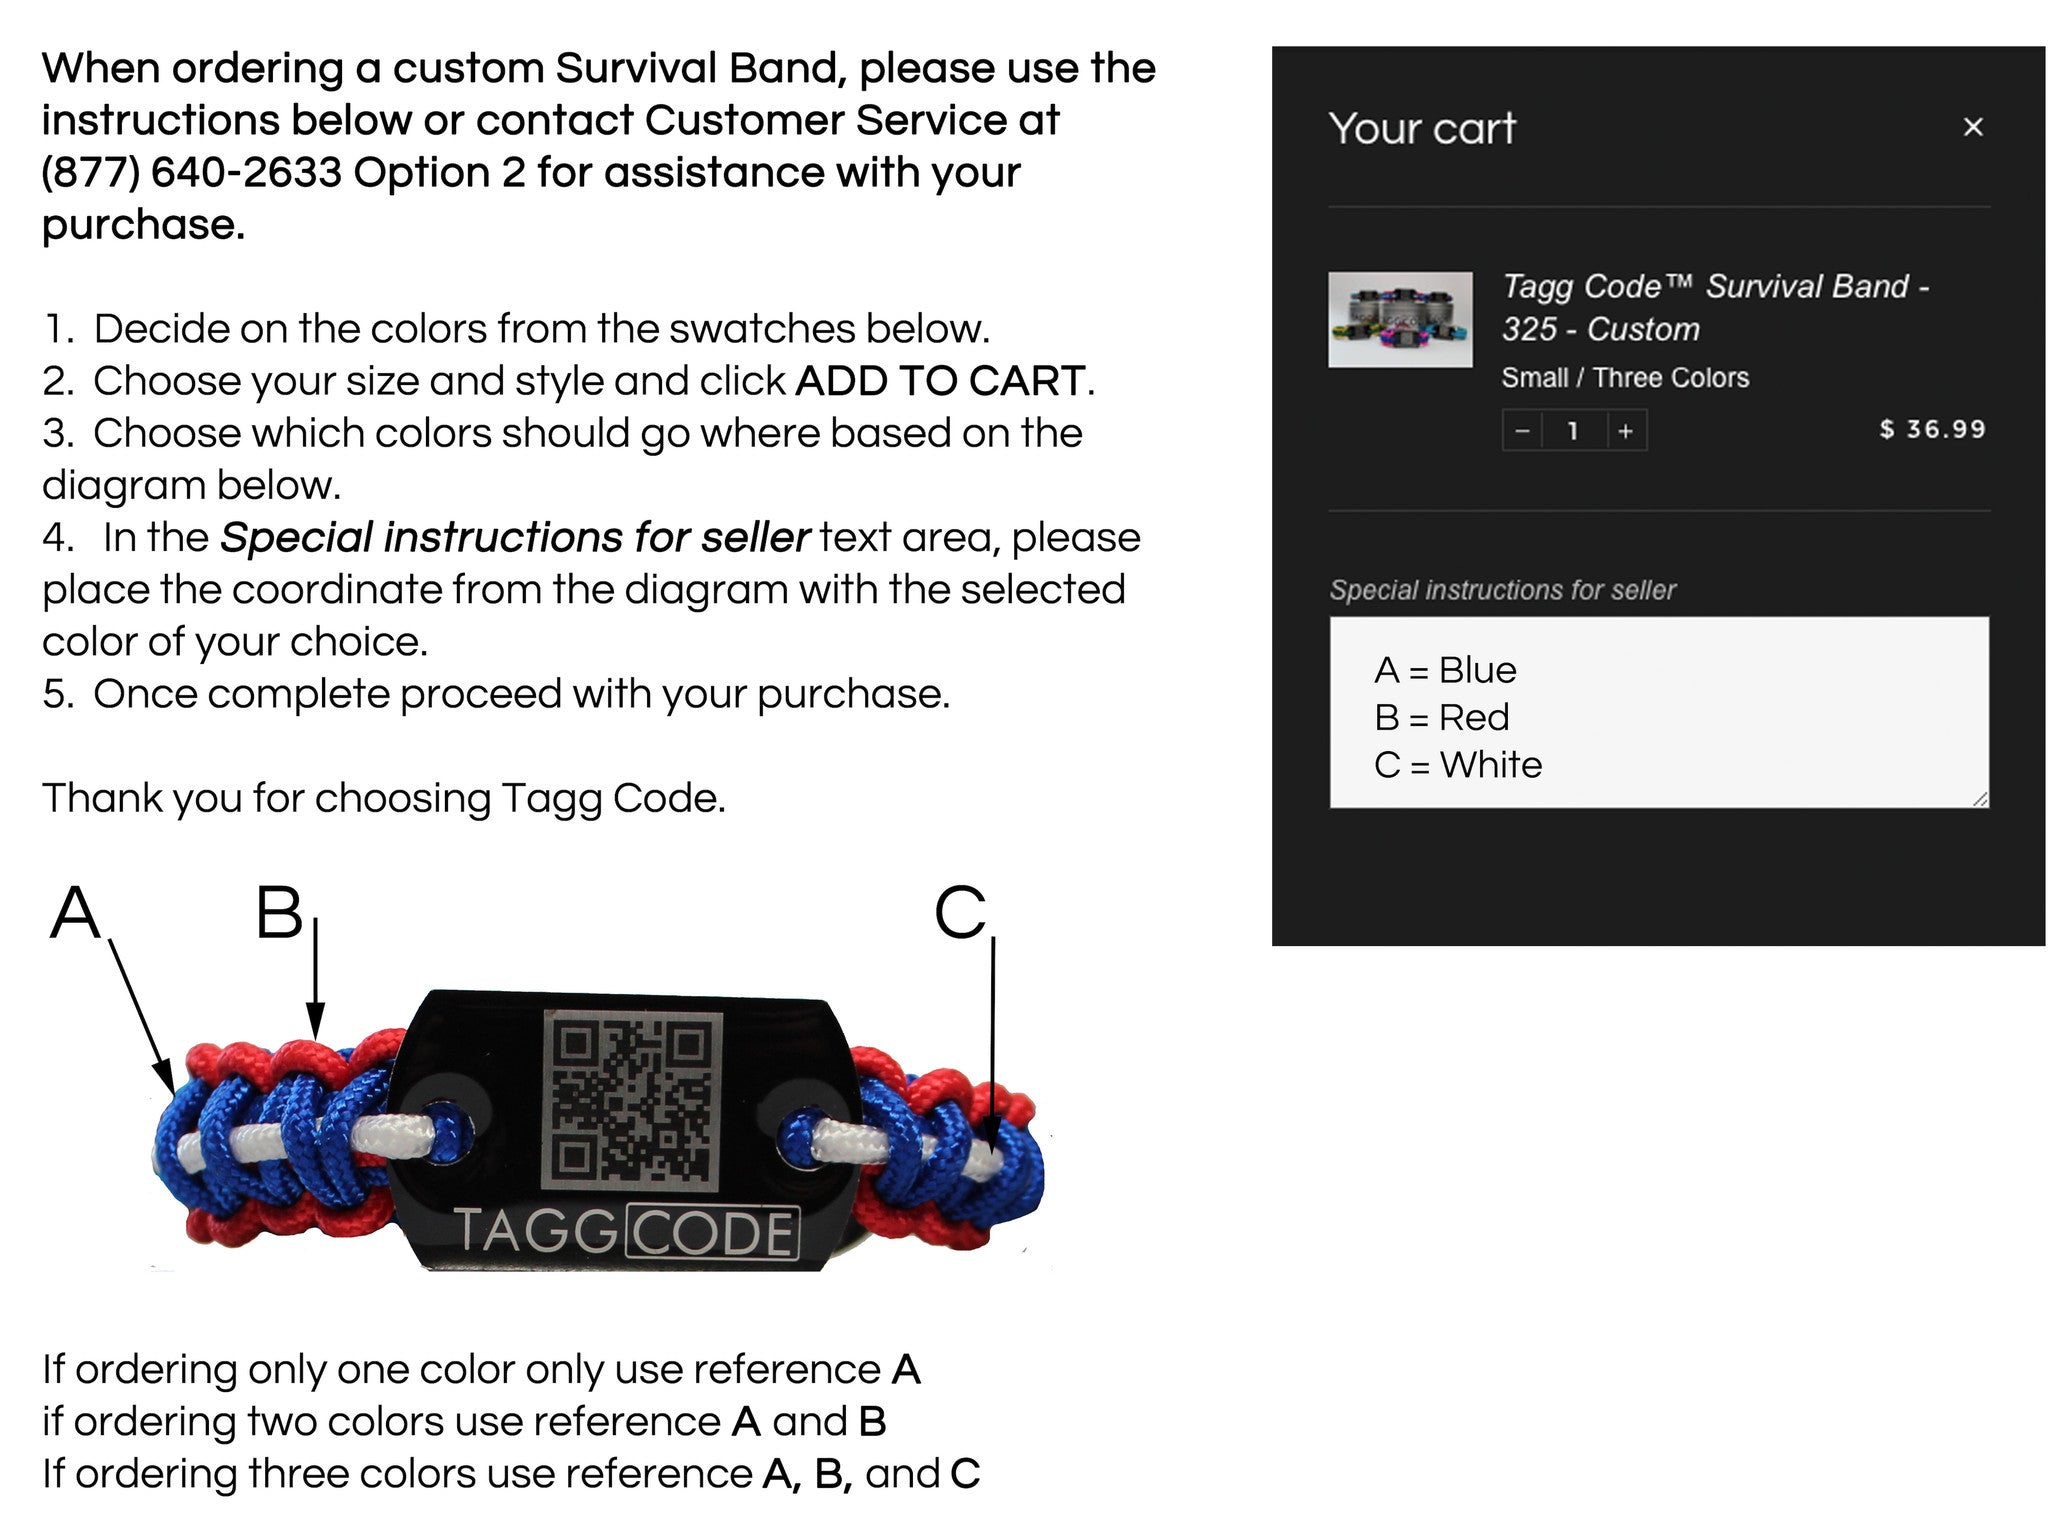 Tagg Code™ Survival Band - 325 - Custom